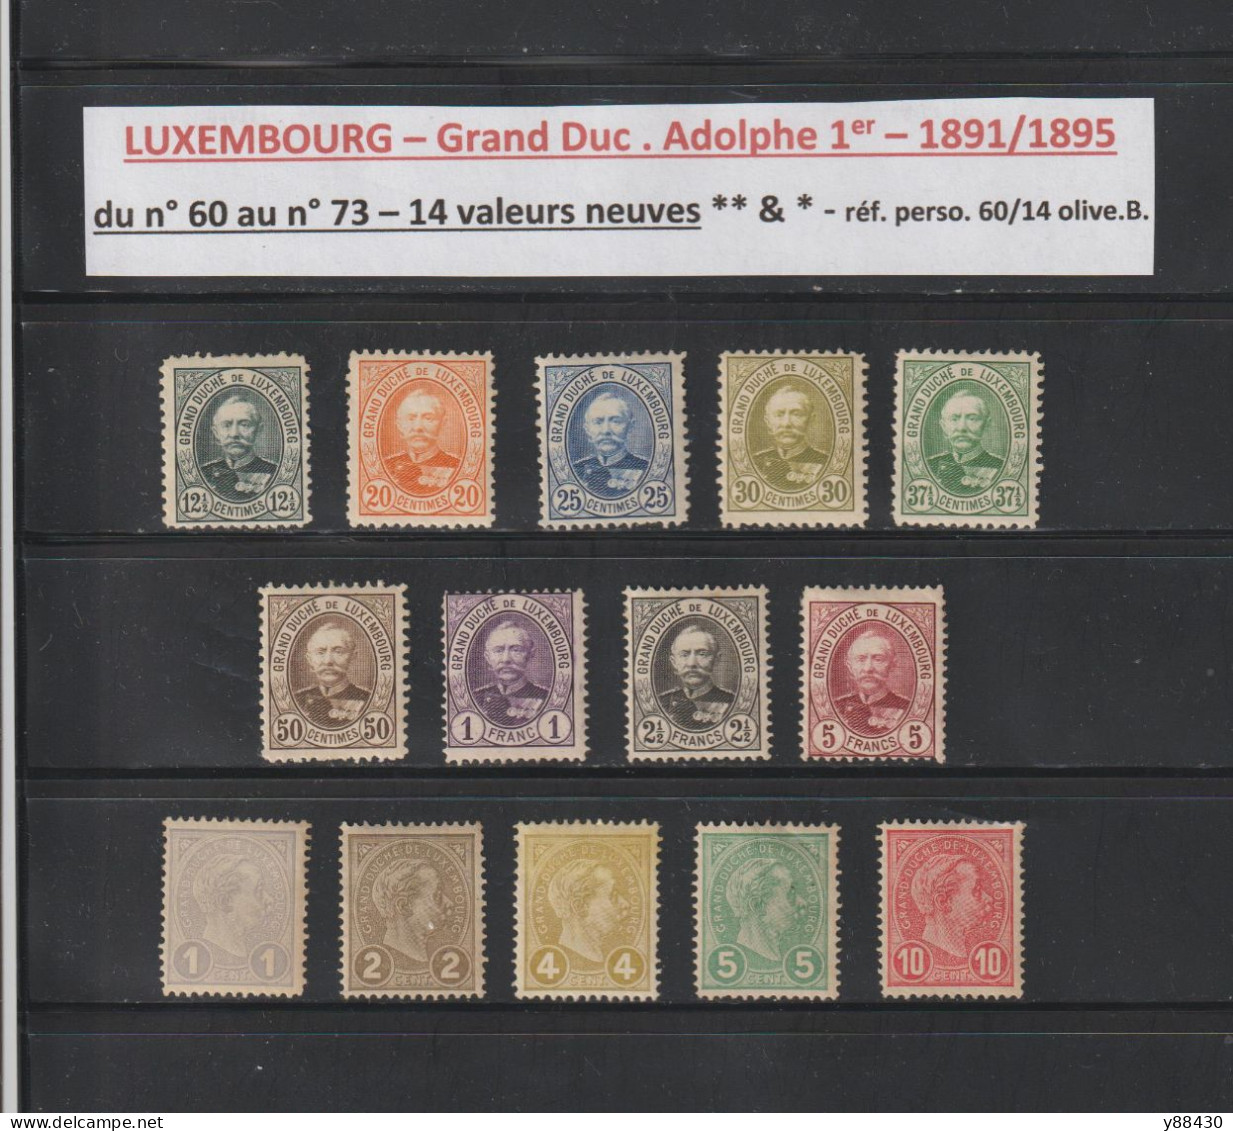 LUXEMBOURG - 60 à 73 De 1891/1895 - Neuf ** & *  -  14 Valeurs - Grand Duc Adolphe 1er - Face Et Profil - 2 Scan - 1891 Adolphe Voorzijde